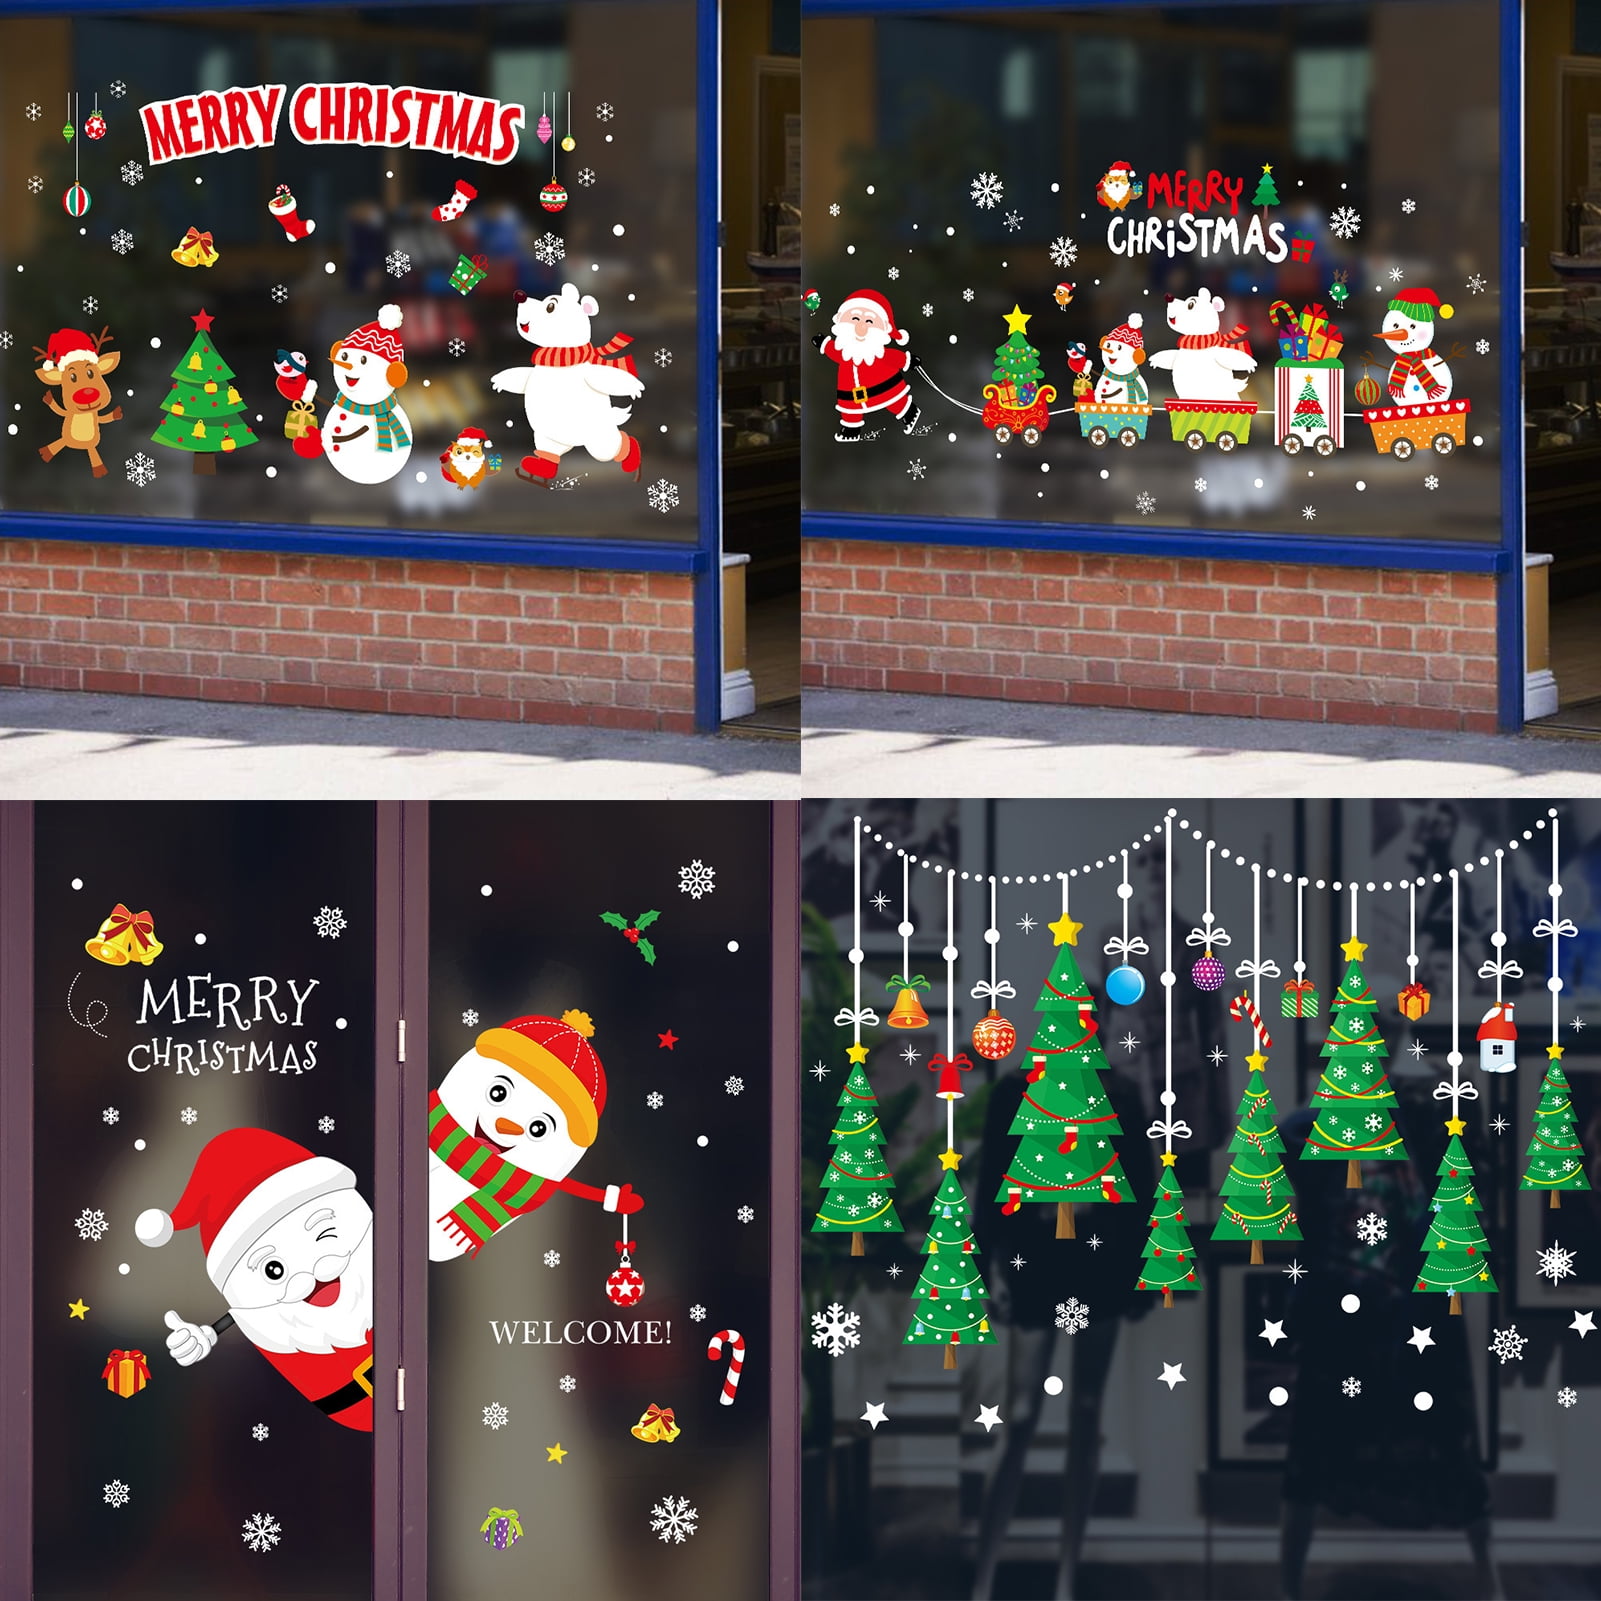 Merry Christmas Window Wall Sticker Decals Snowflake Santa Claus Home Xmas Decor 